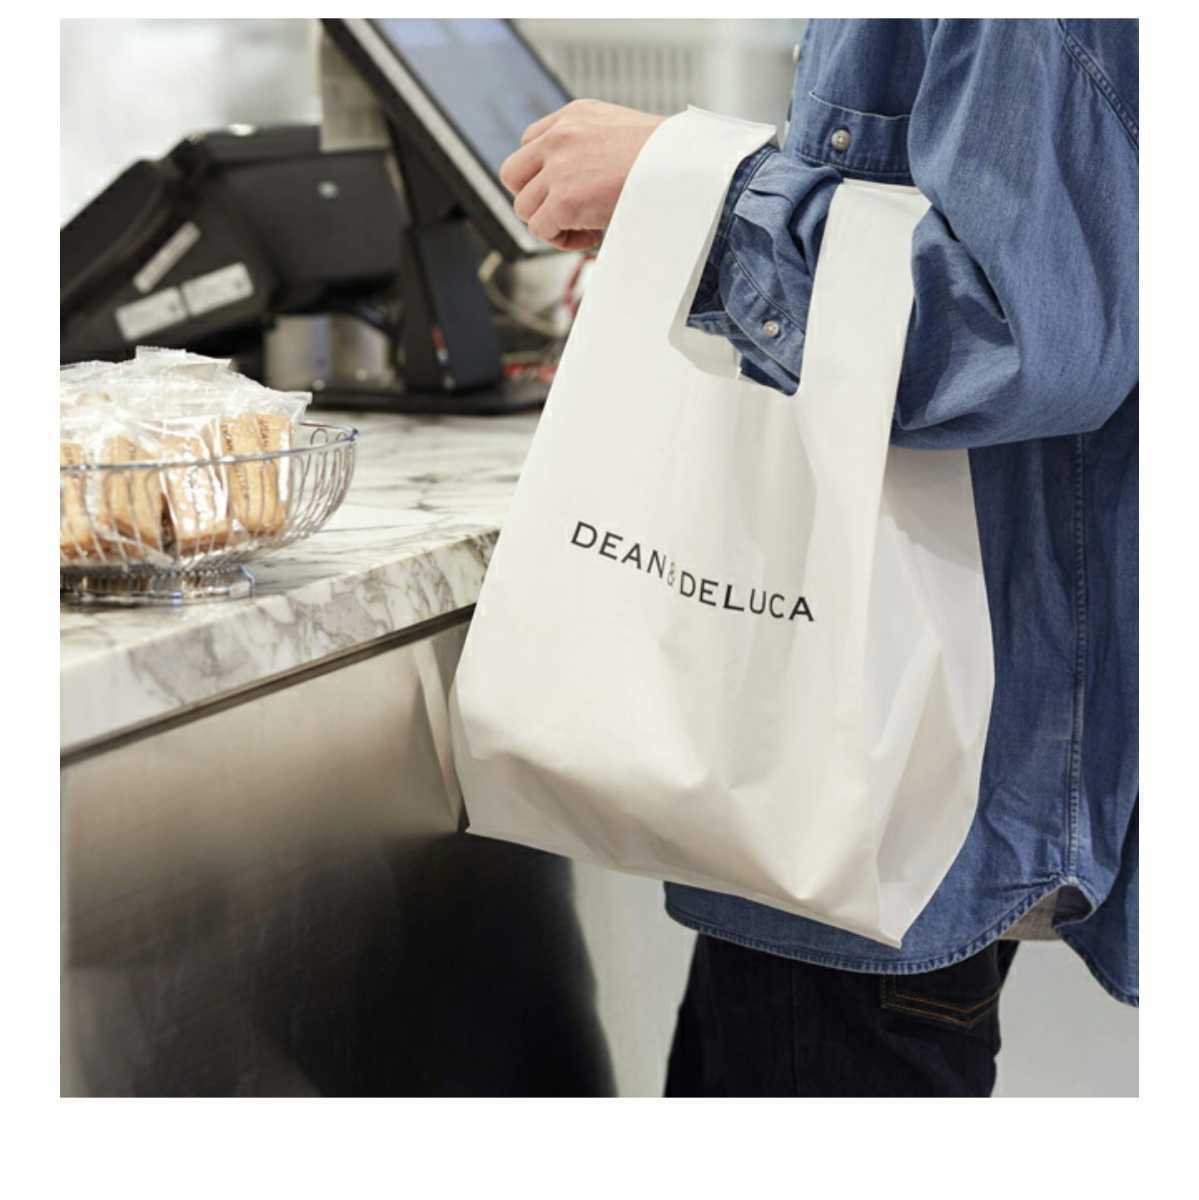 DEAN&DELUCA ミニマムエコバッグ ホワイト ディーン&デルーカ トートバッグ 買い物バッグ エコバック 折りたたみ コンパクト 白 正規品